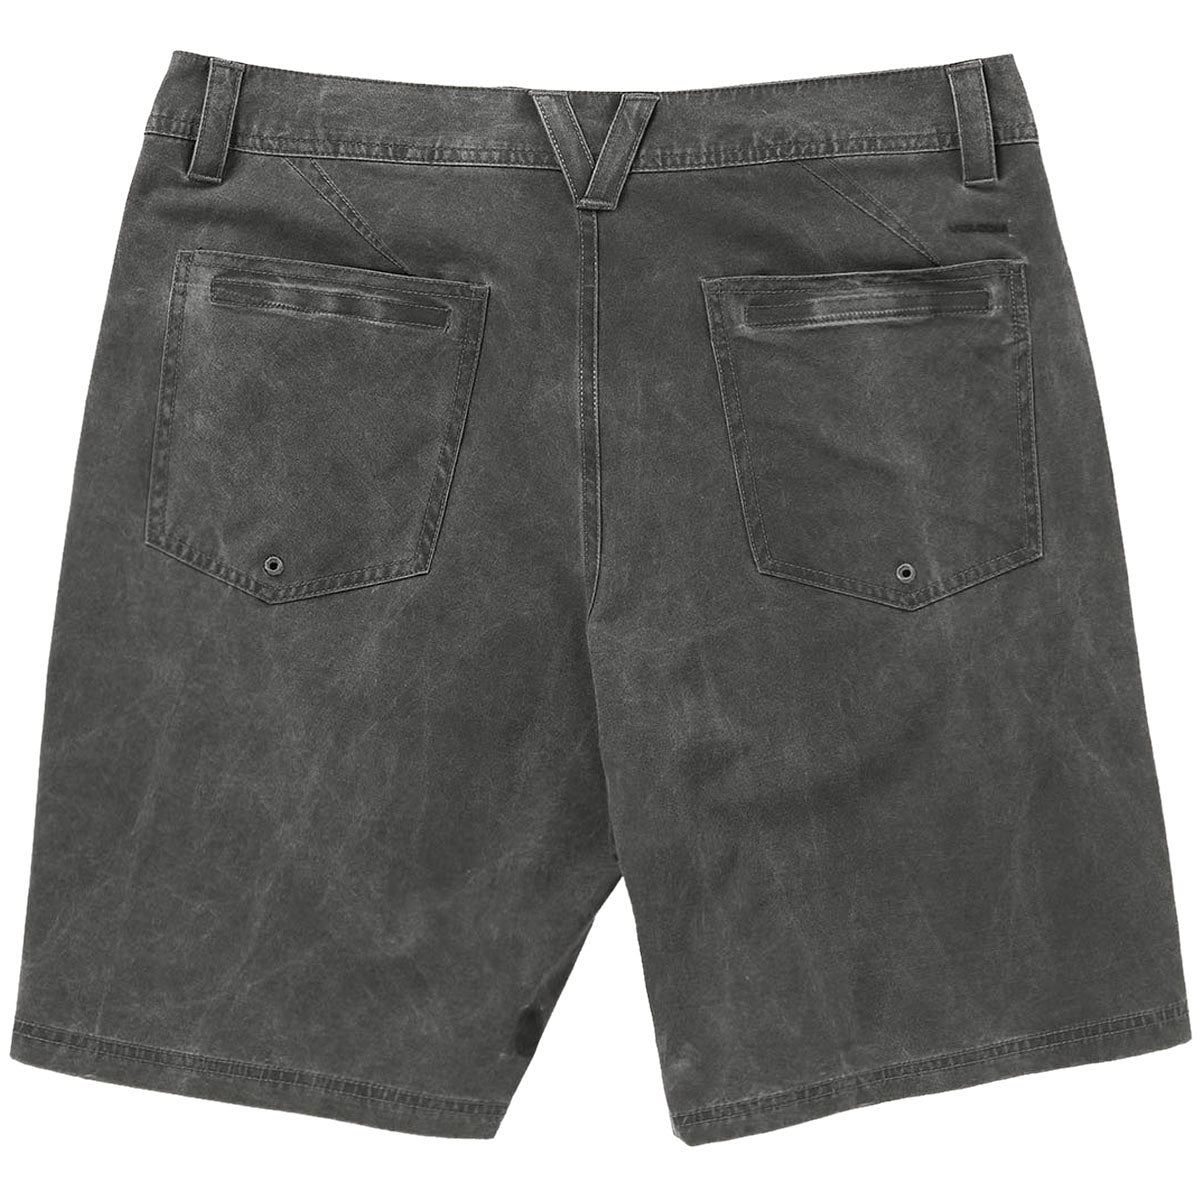 Volcom Stone Faded Hybrid 19 Shorts - Stealth image 2